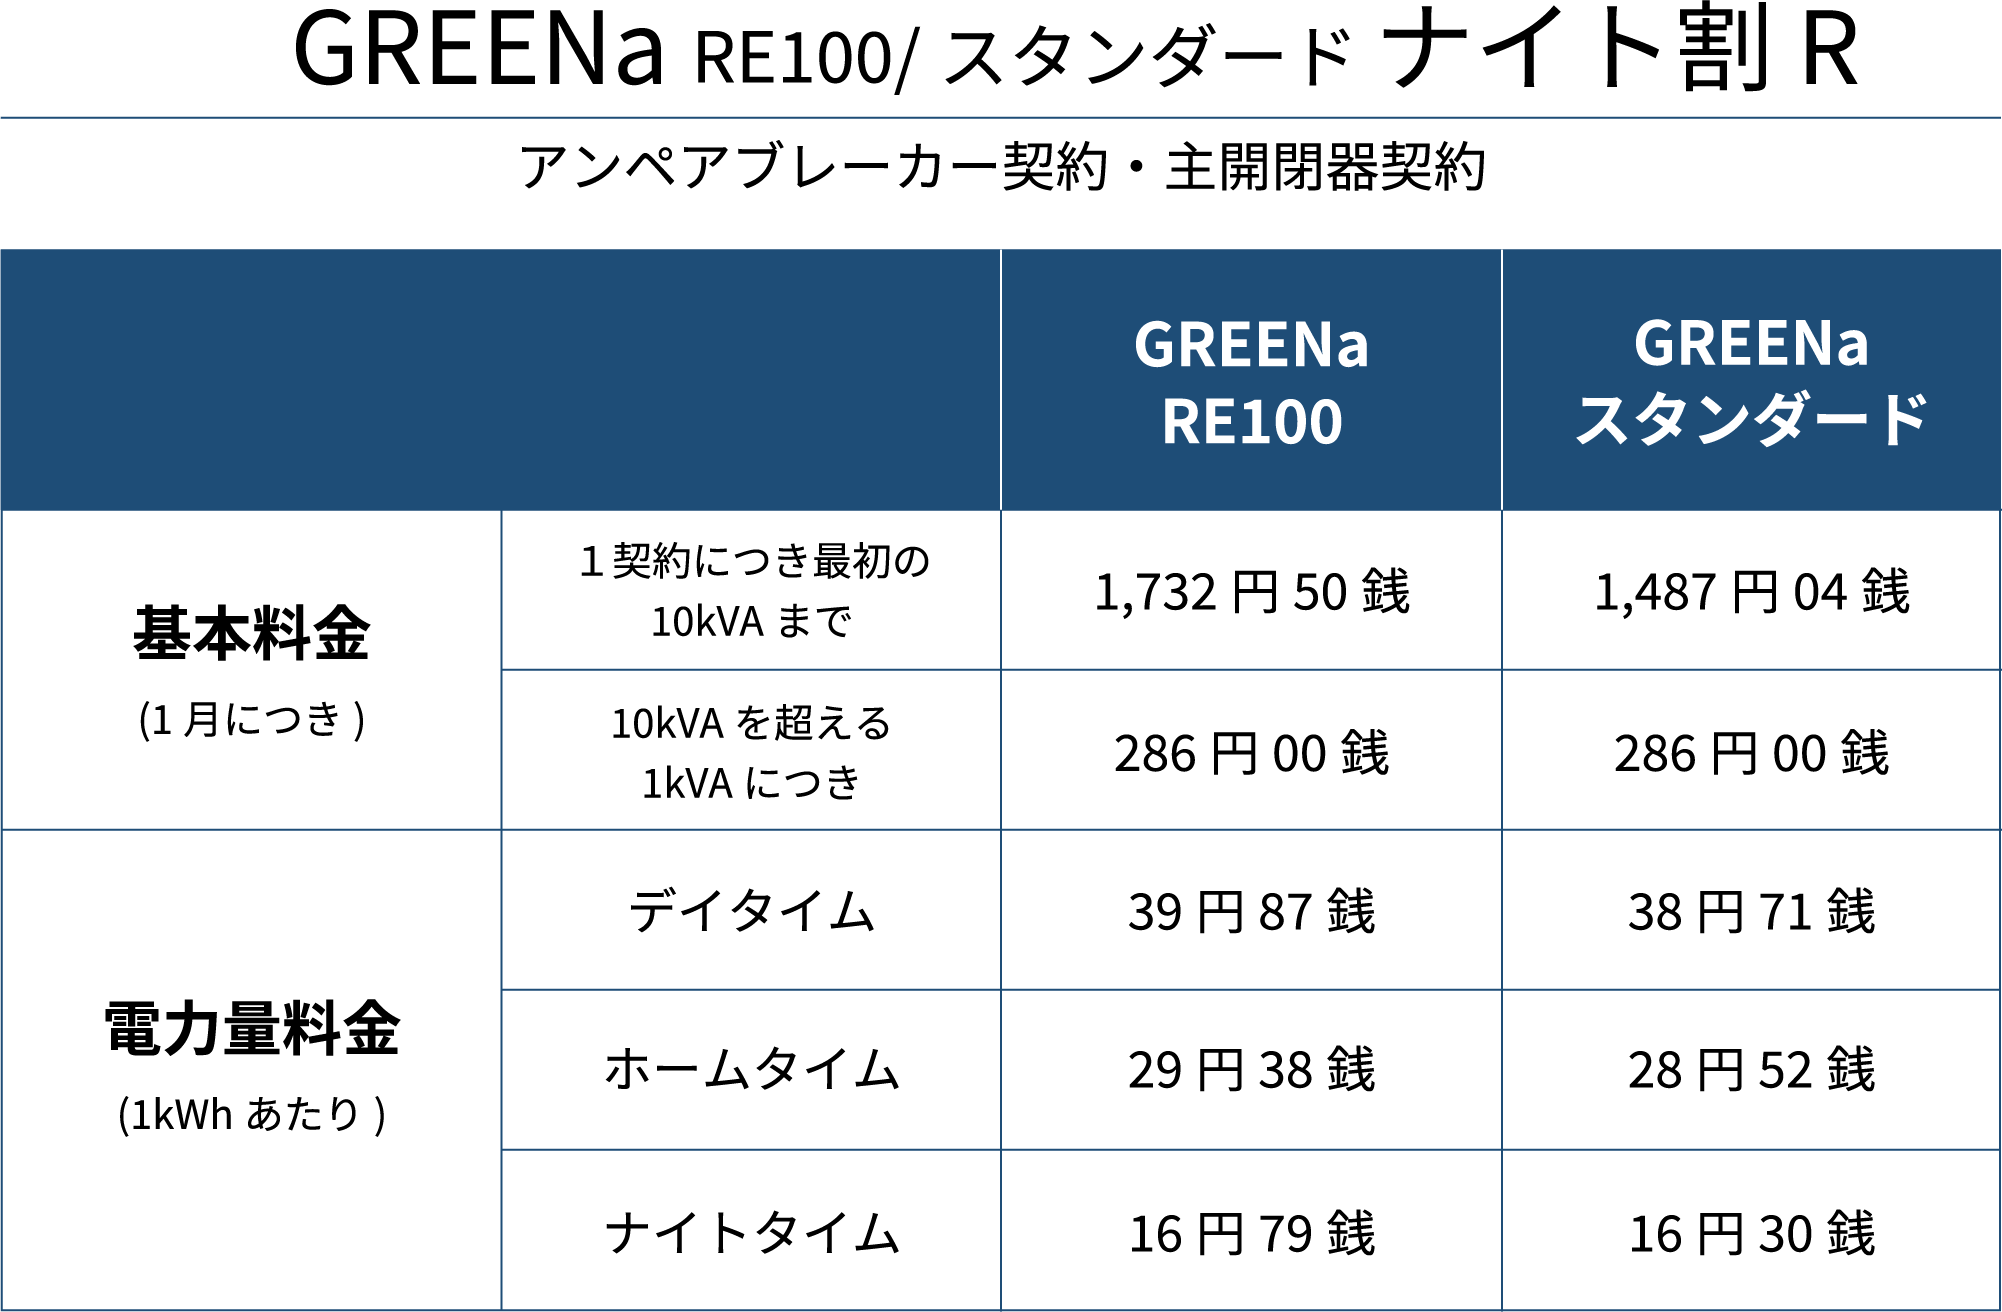 GREENa RE100/スタンダード ナイト割 R